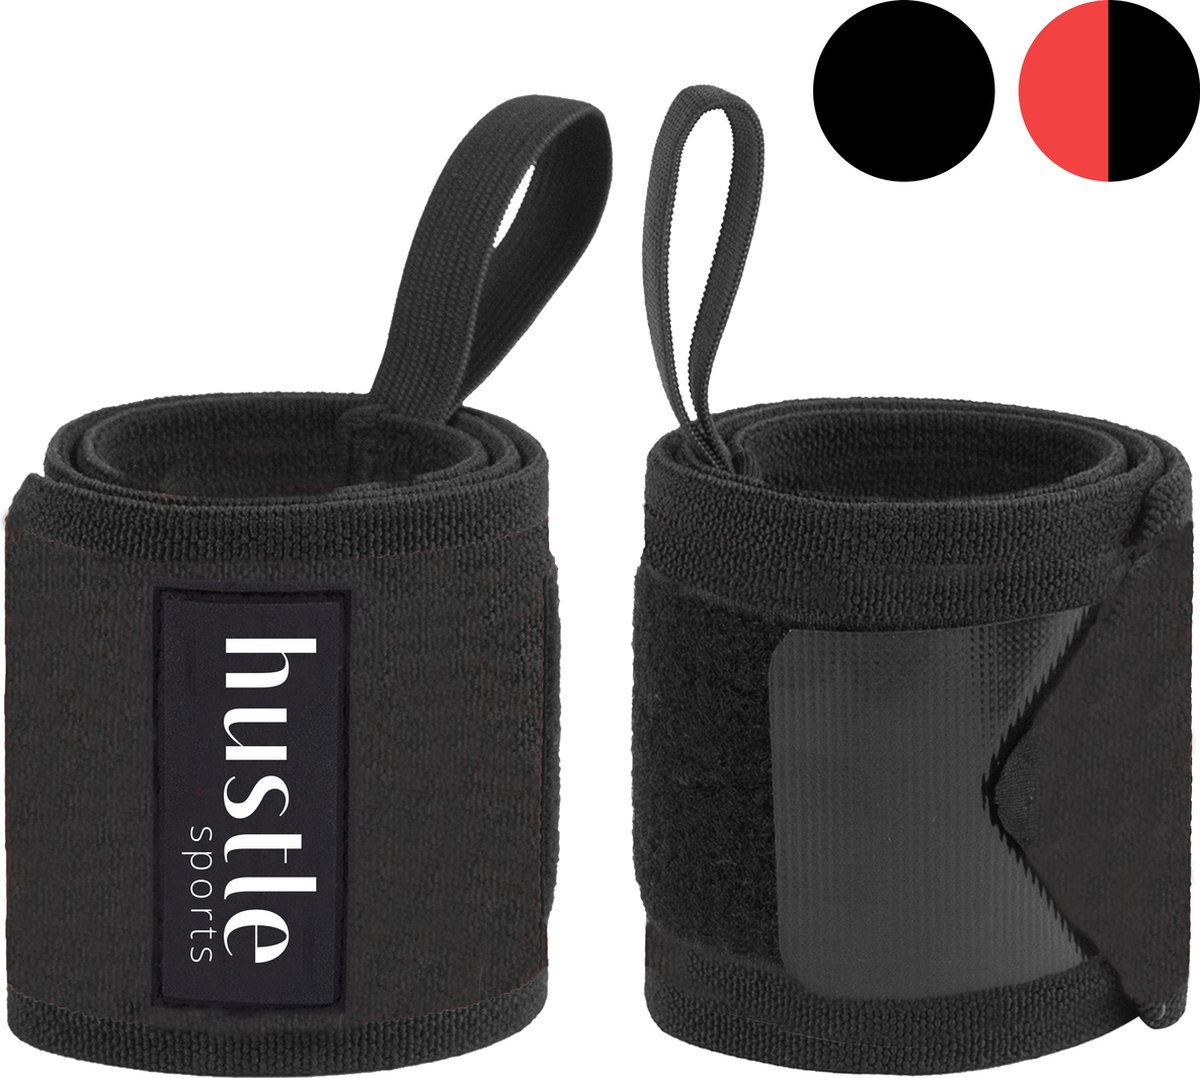 hustle - Zwarte Competitive Wrist wraps met Duimlus - 1 Paar - Polsbrace - Links en Rechts - Fitness - Krachttraining